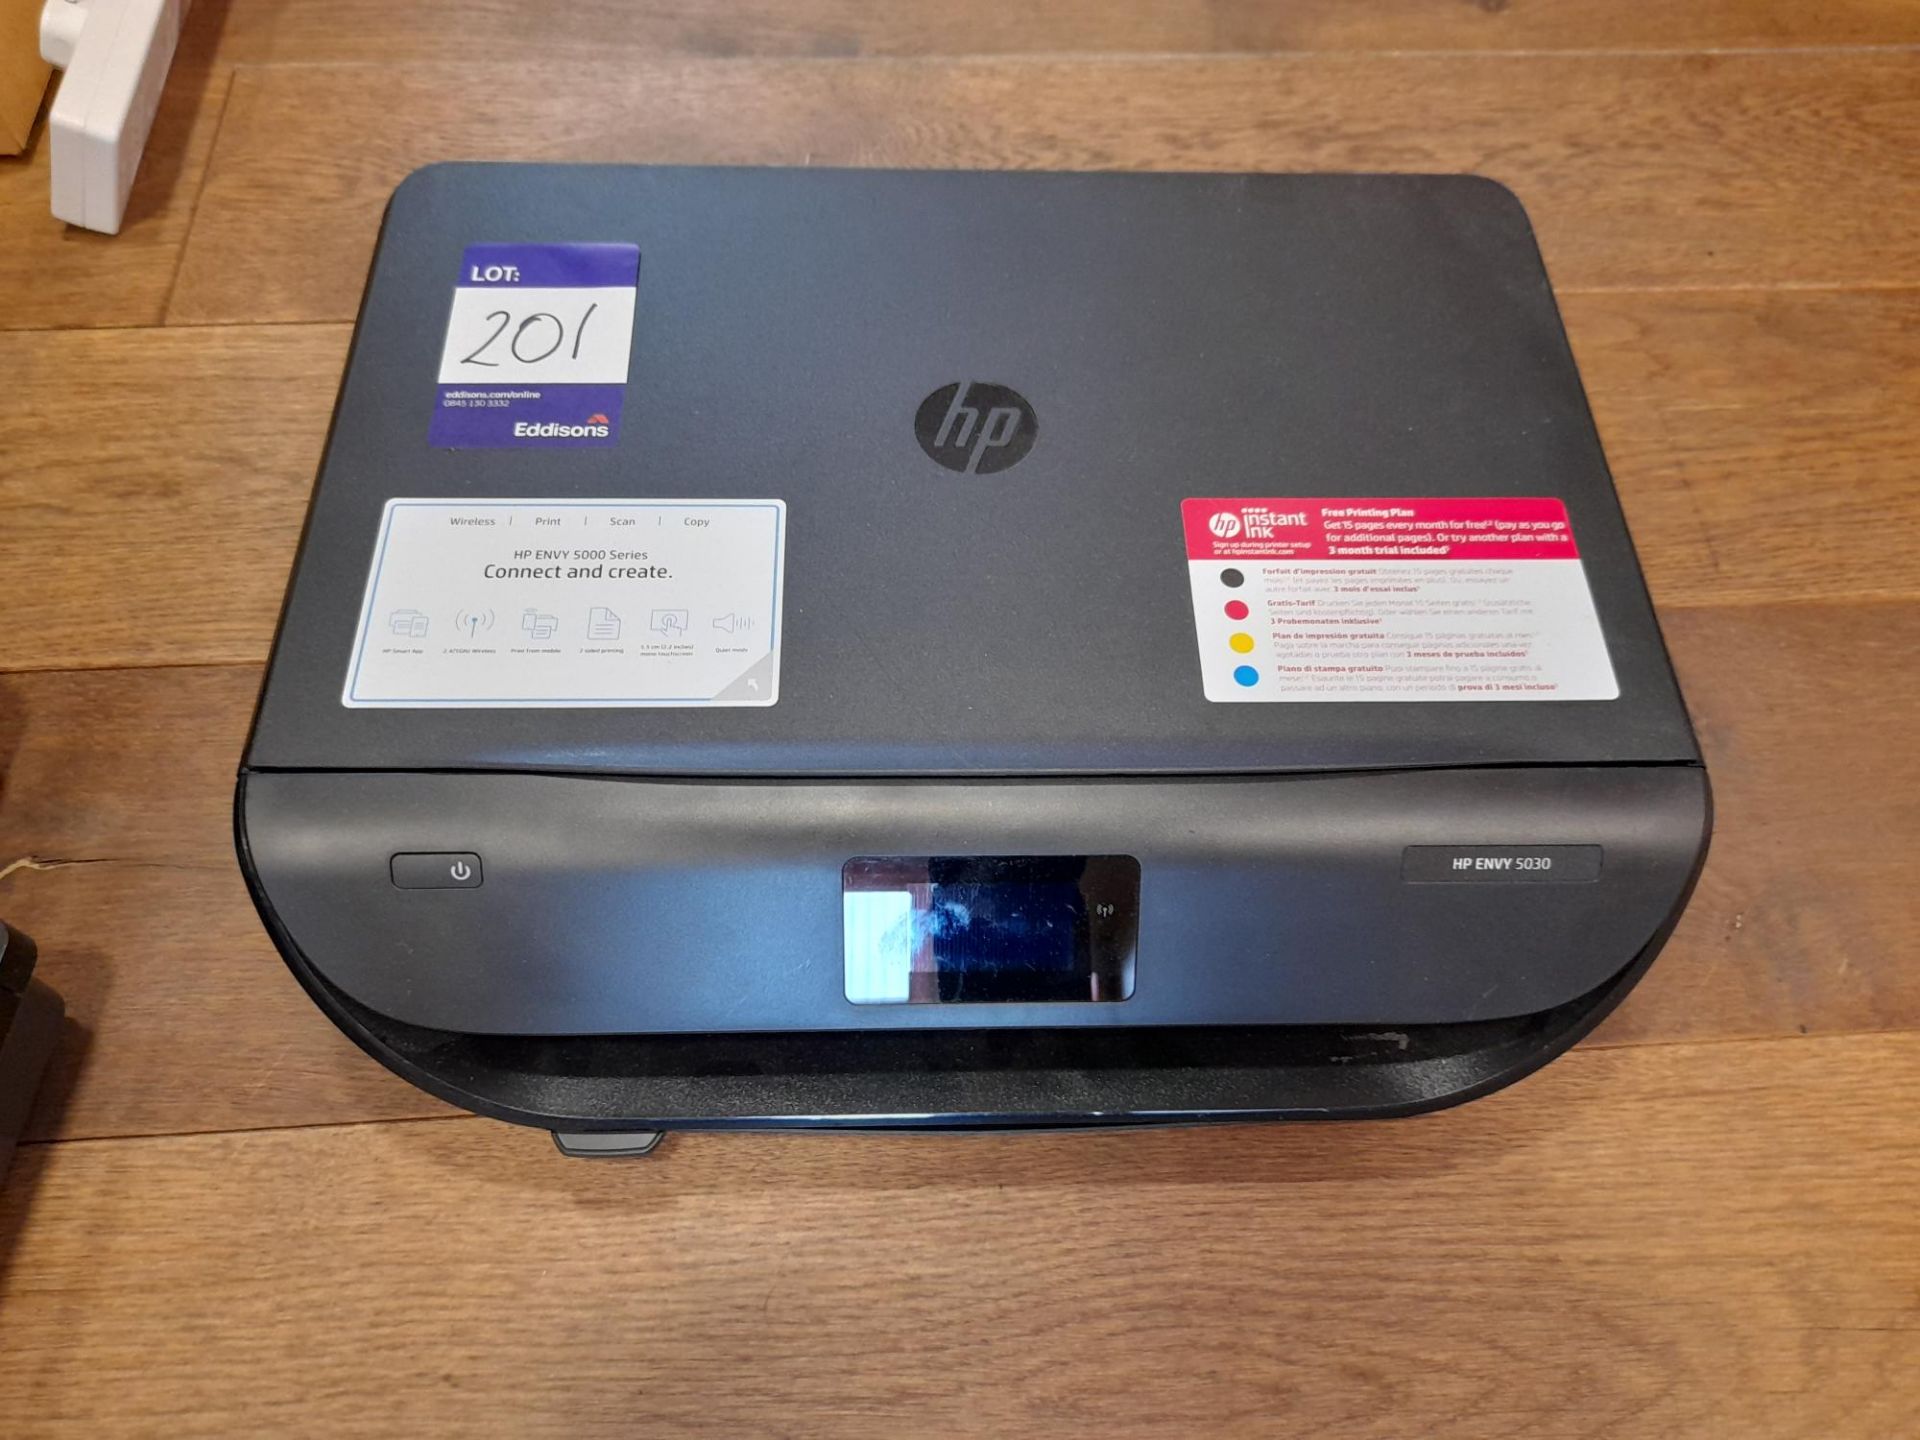 HP Envy 5030 wireless printer/scanner/copier (No power cable)